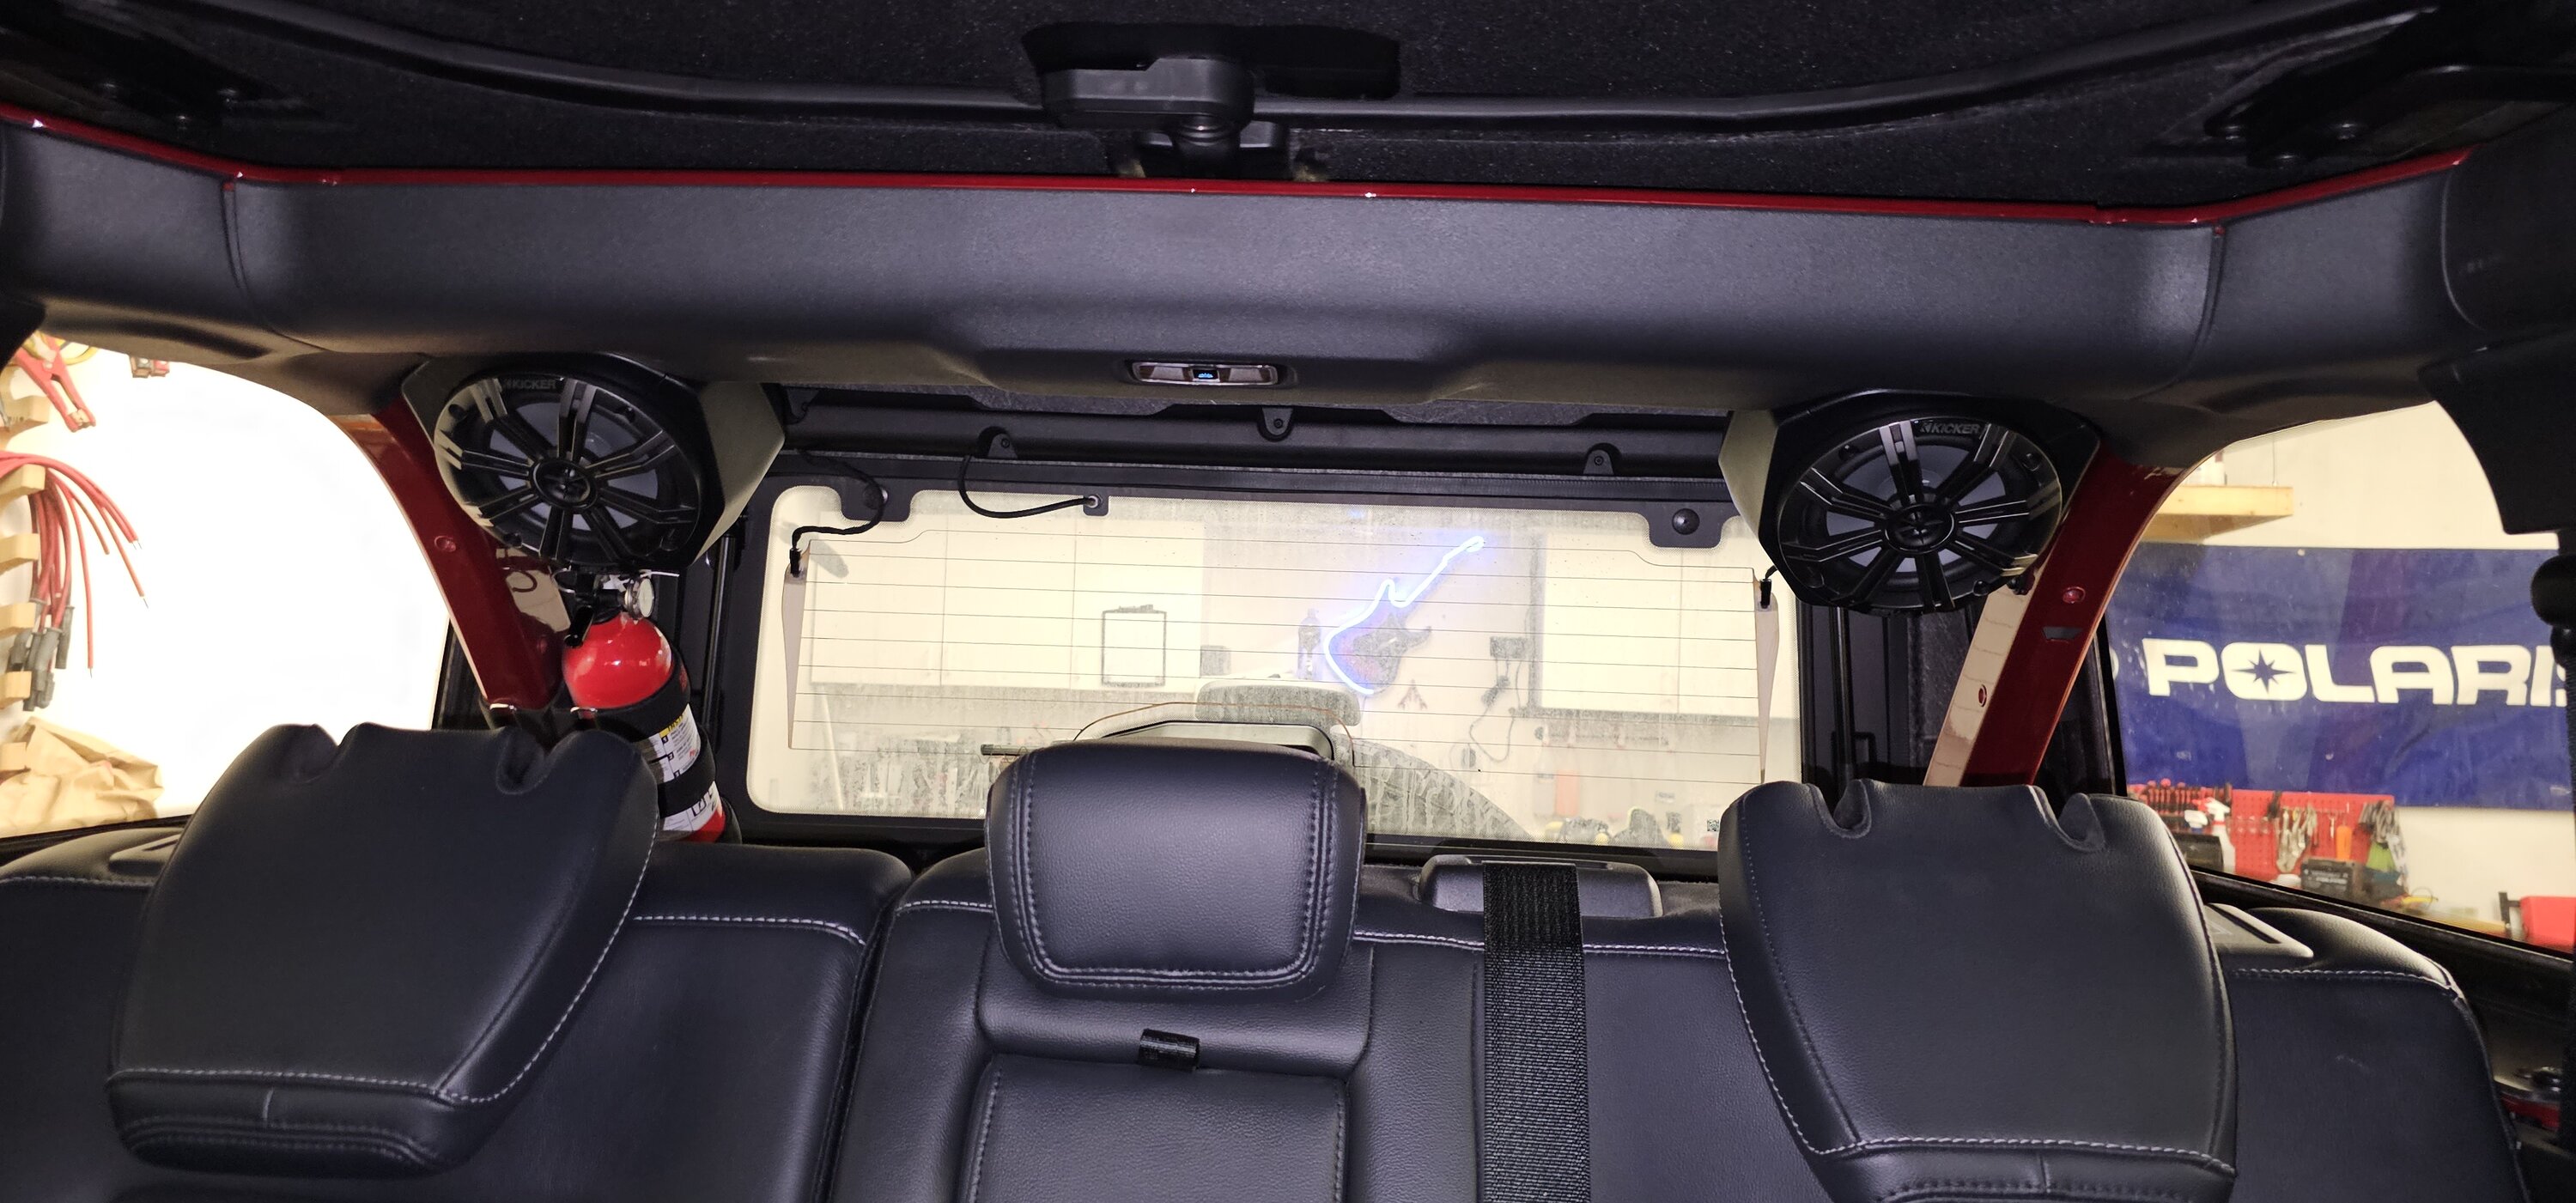 Ford Bronco Installed - SSV Works rear pods w/ Kicker speakers 20230216_125349